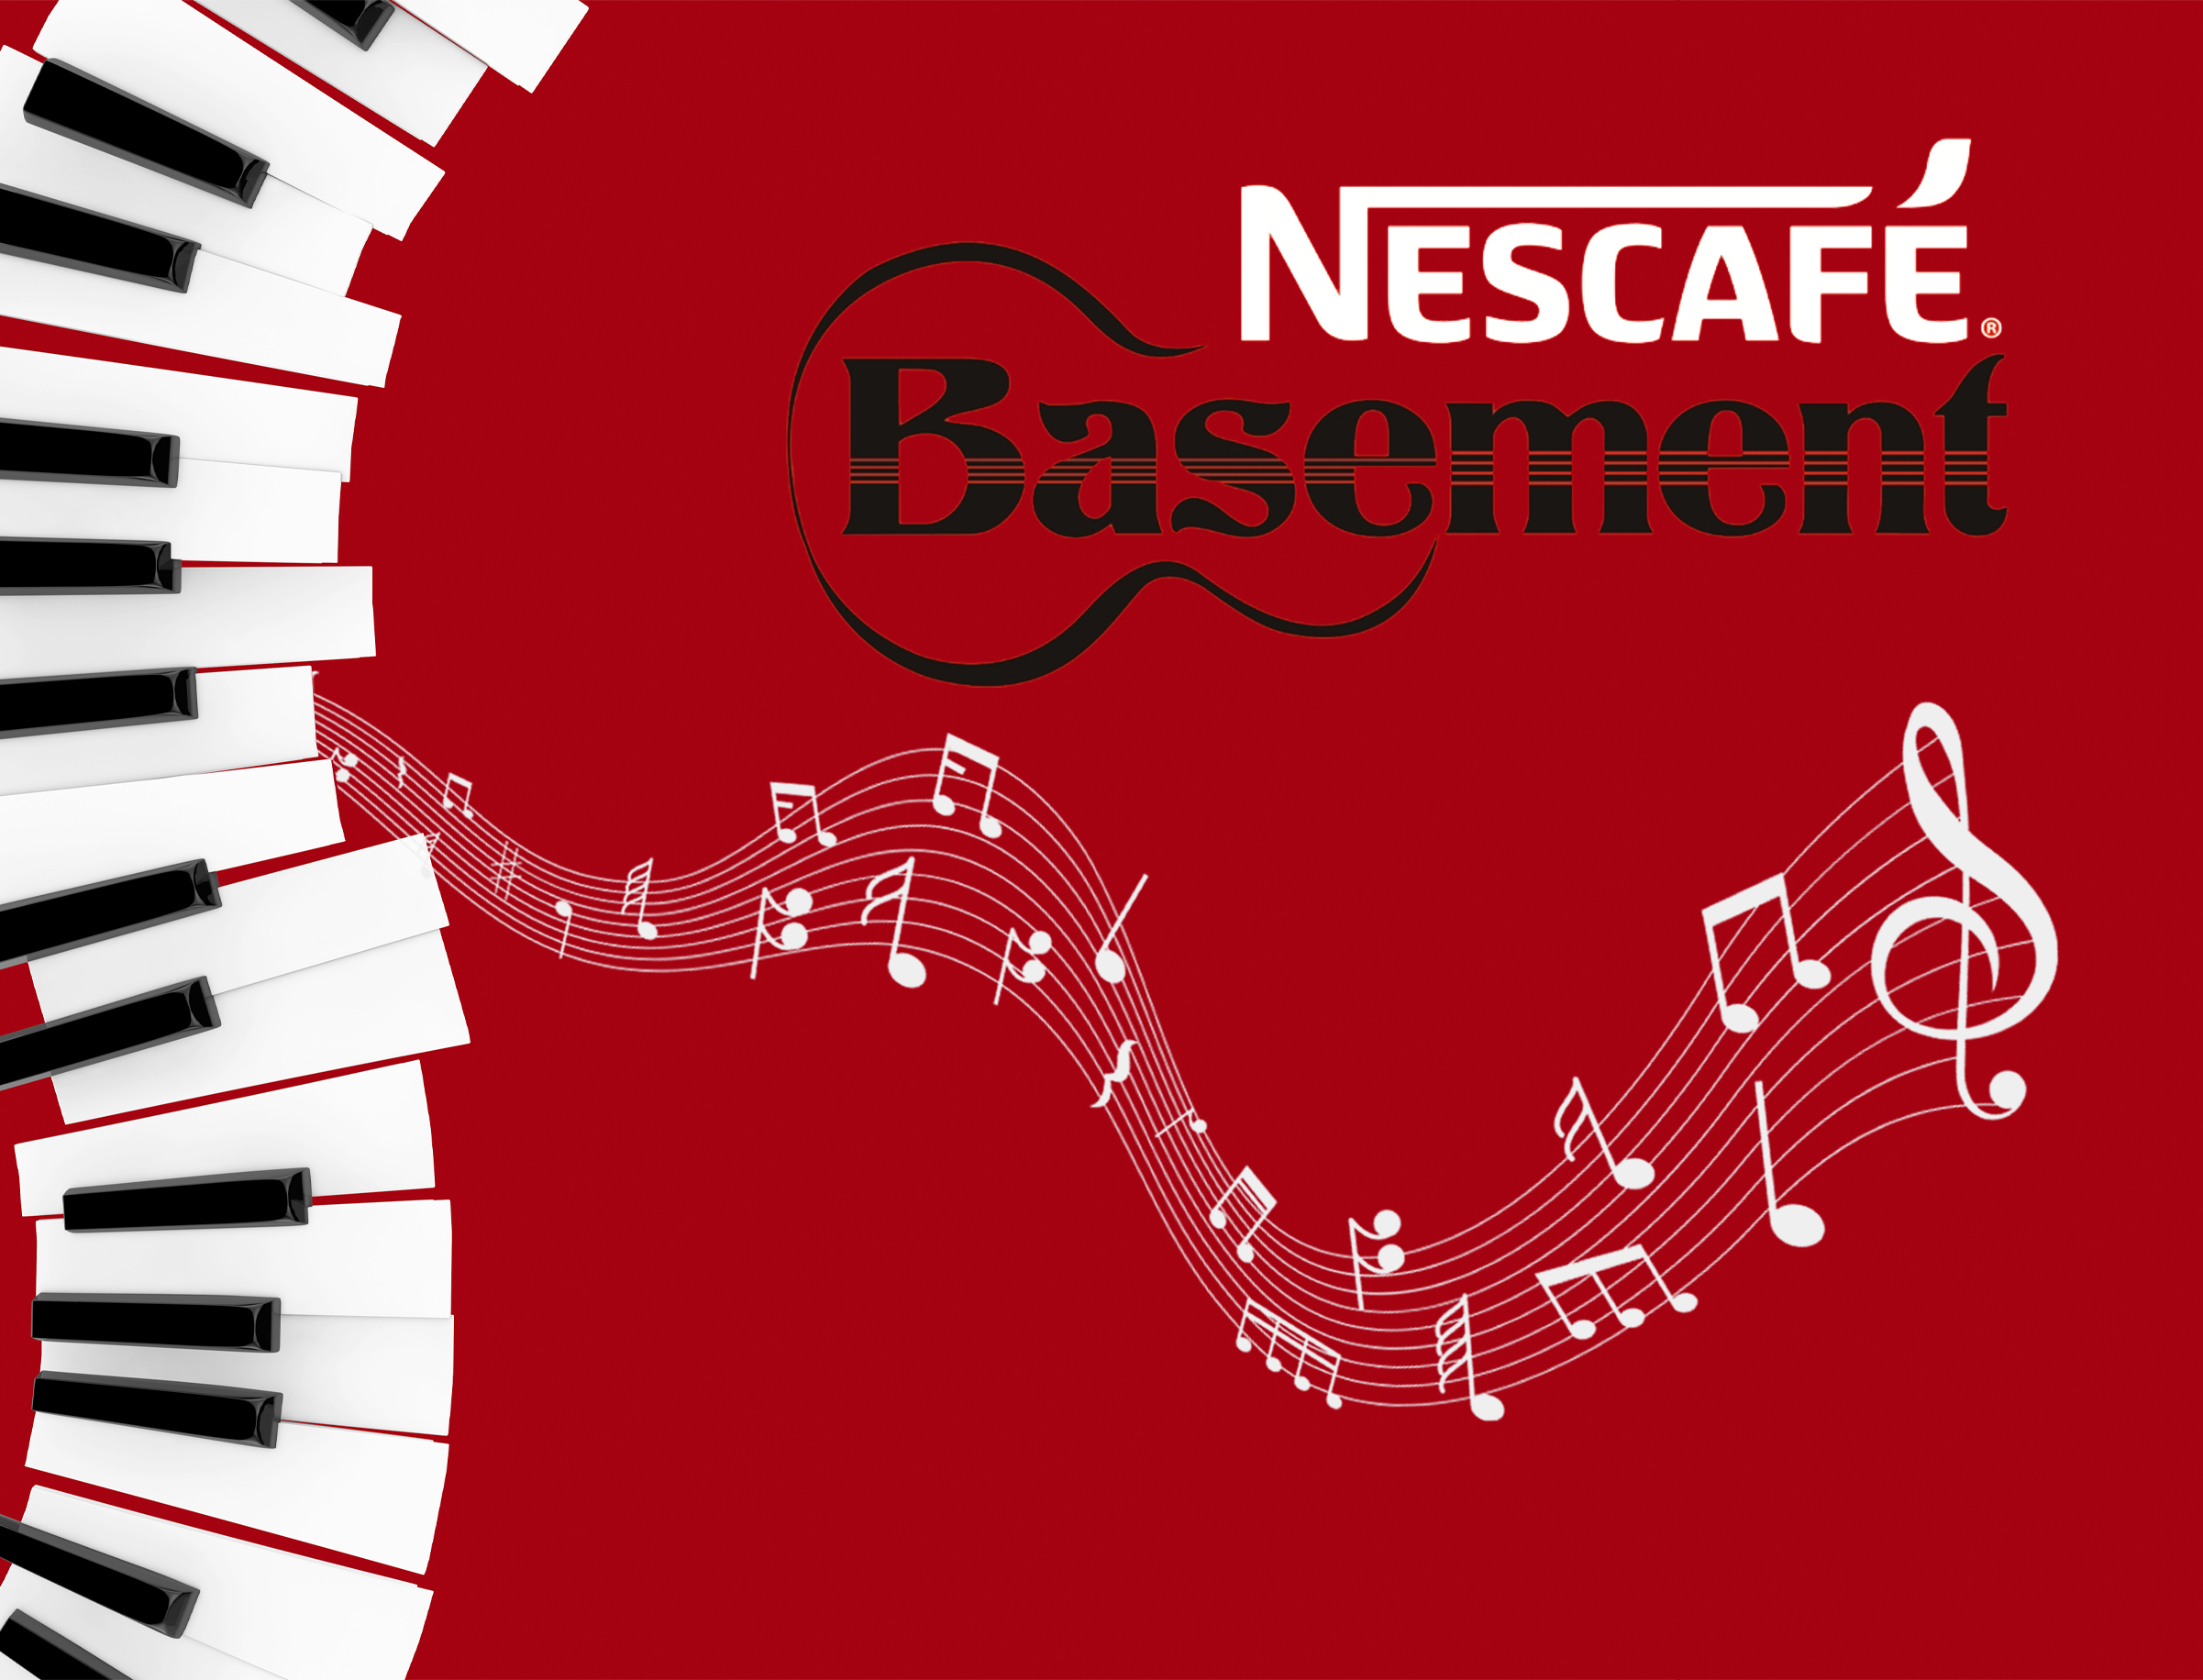 Nescafe Basement